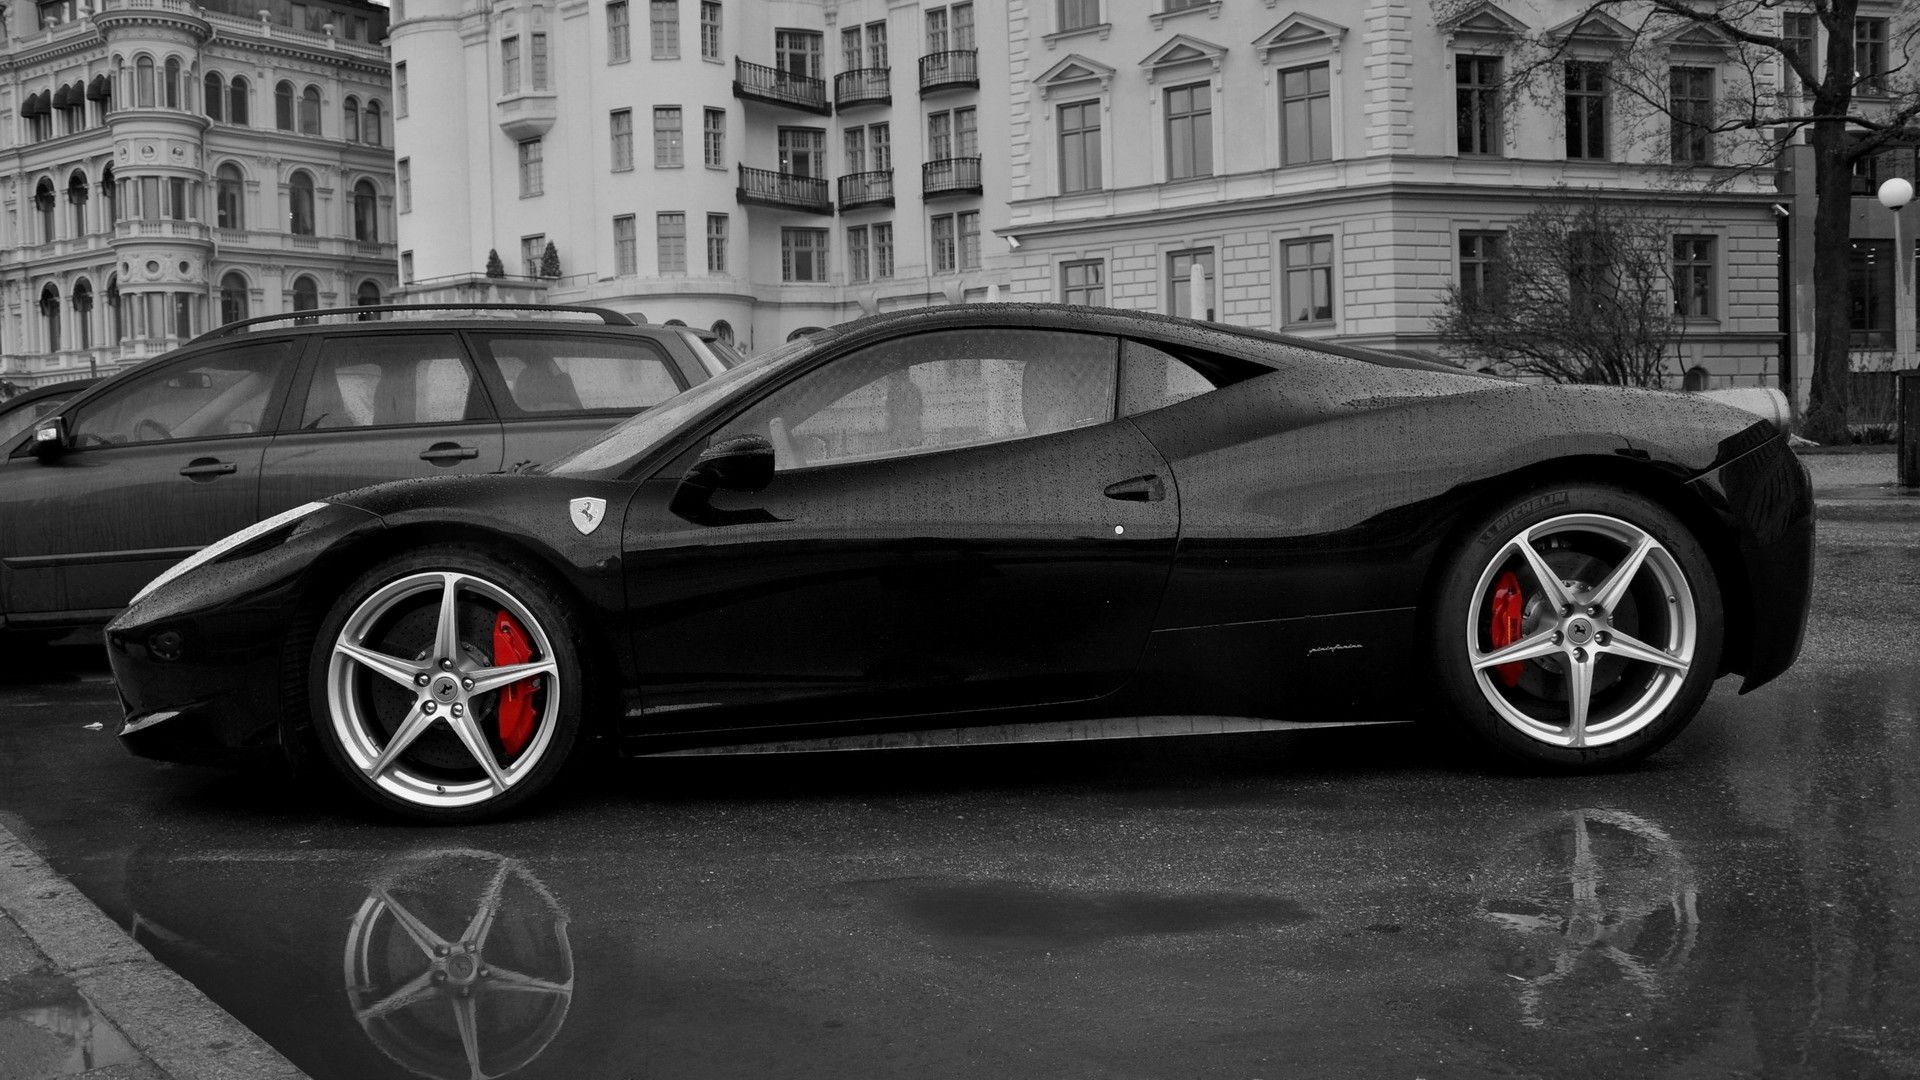 Best Black Ferrari - Black Ferrari Wallpaper Hd For Desktop - HD Wallpaper 